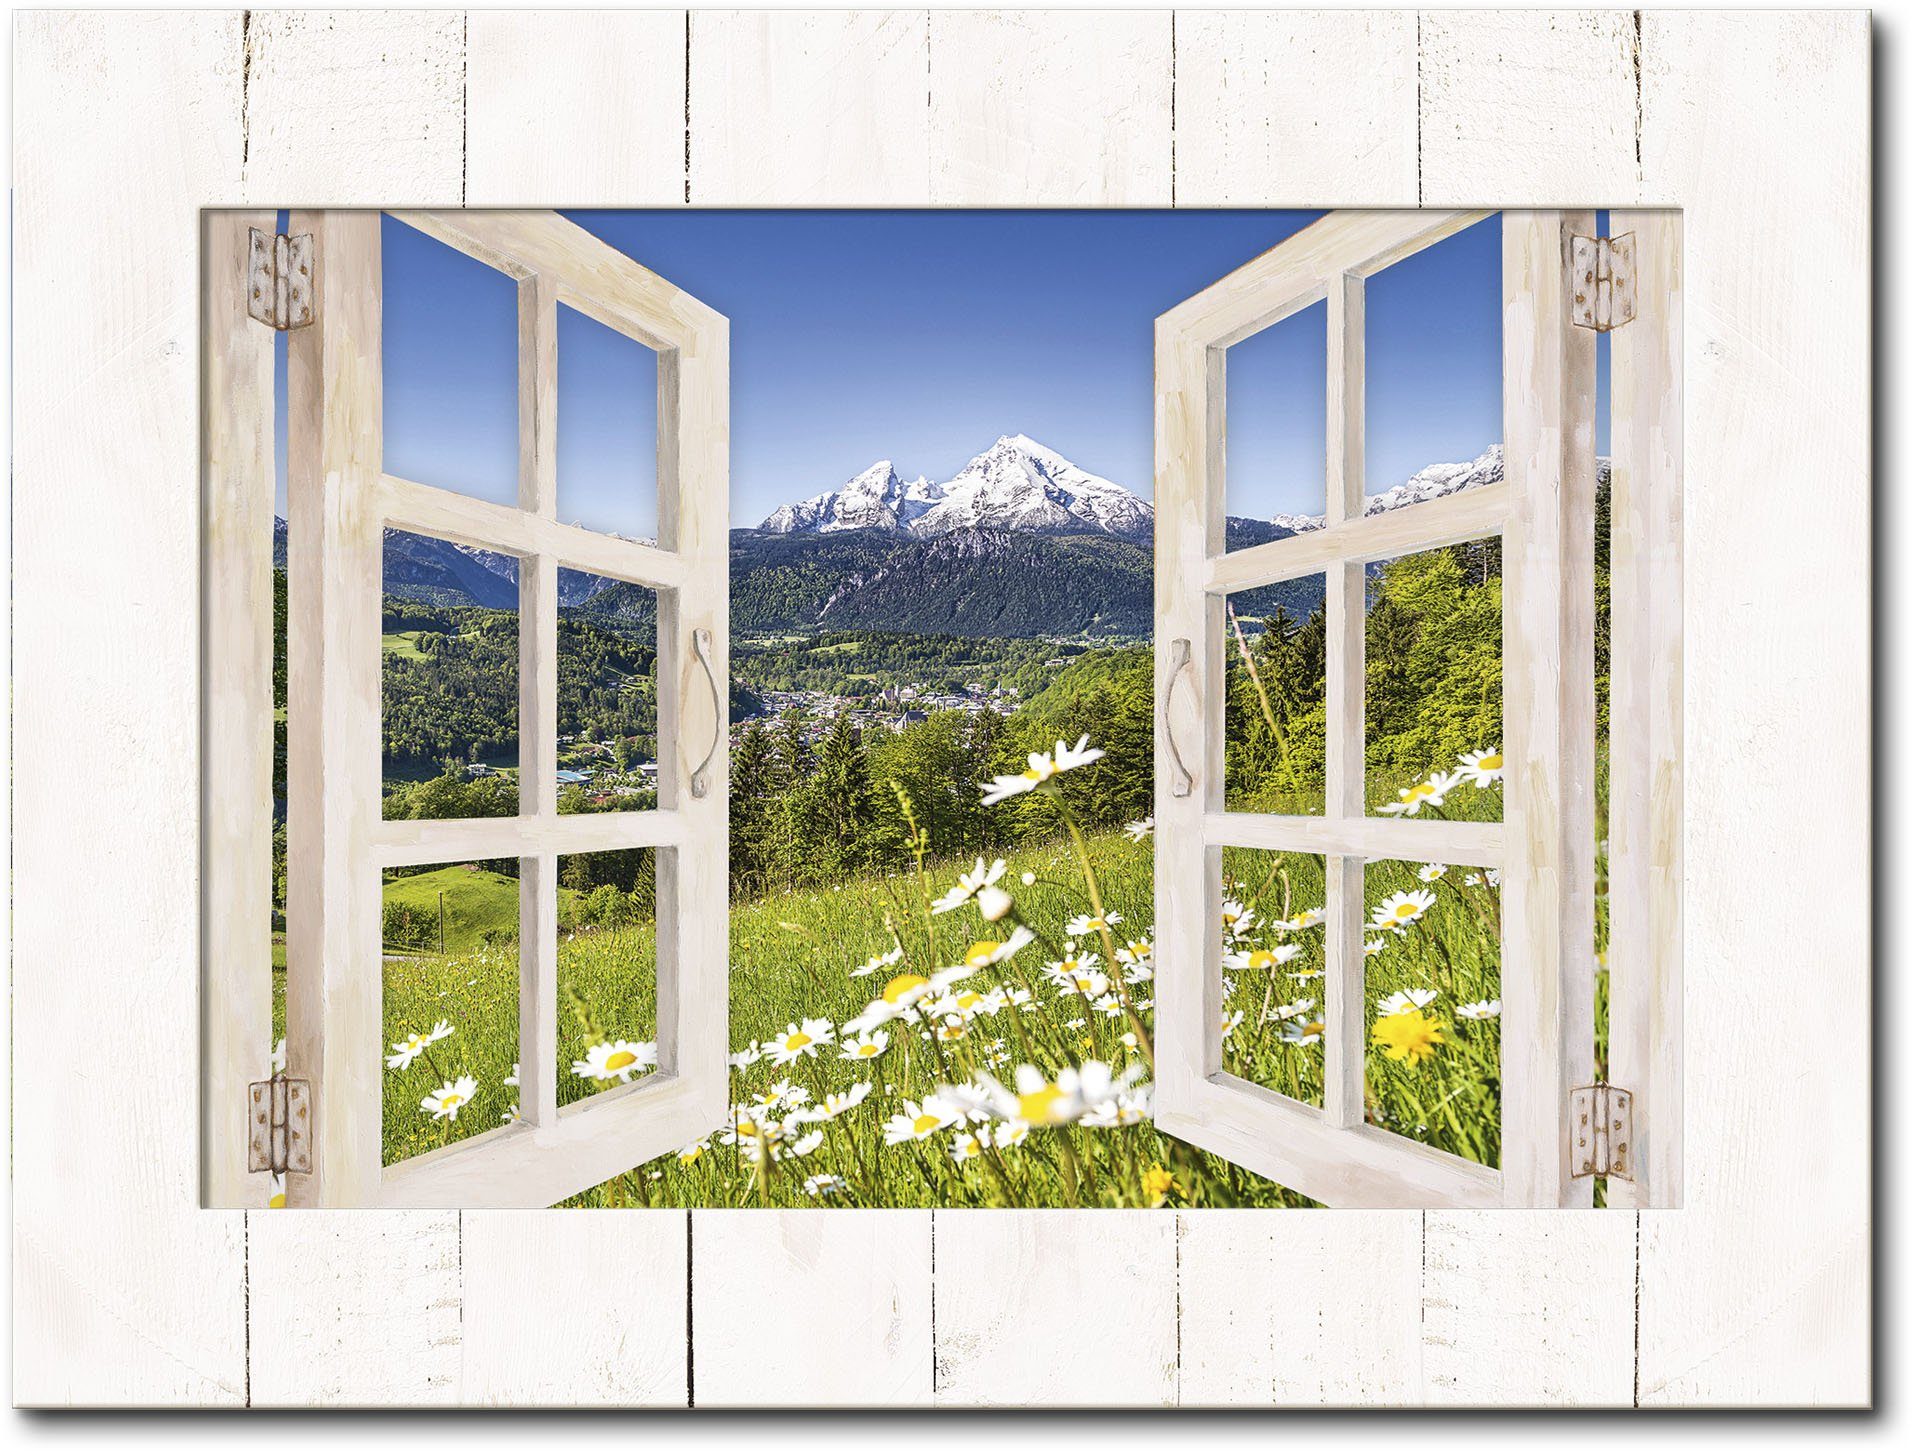 Artland Artprint Blik uit het venster Beierse Alpen (1 stuk)